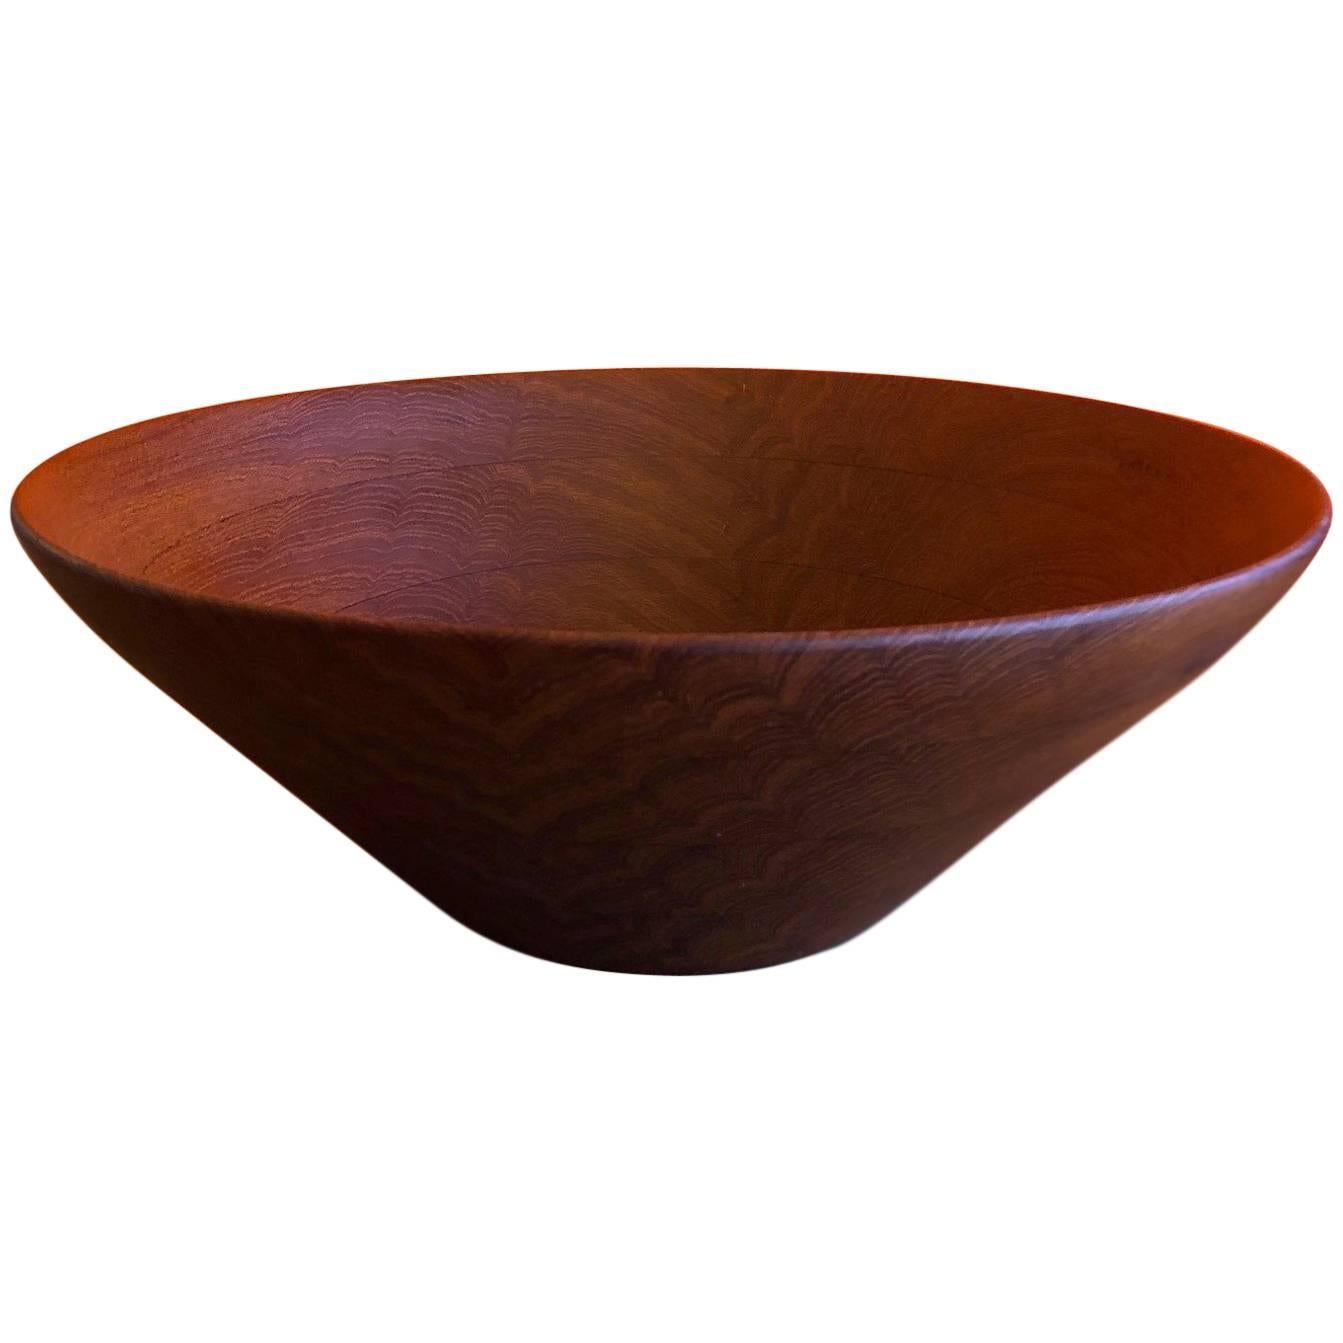 Danish Modern Staved Teak Bowl by Digsmed For Sale